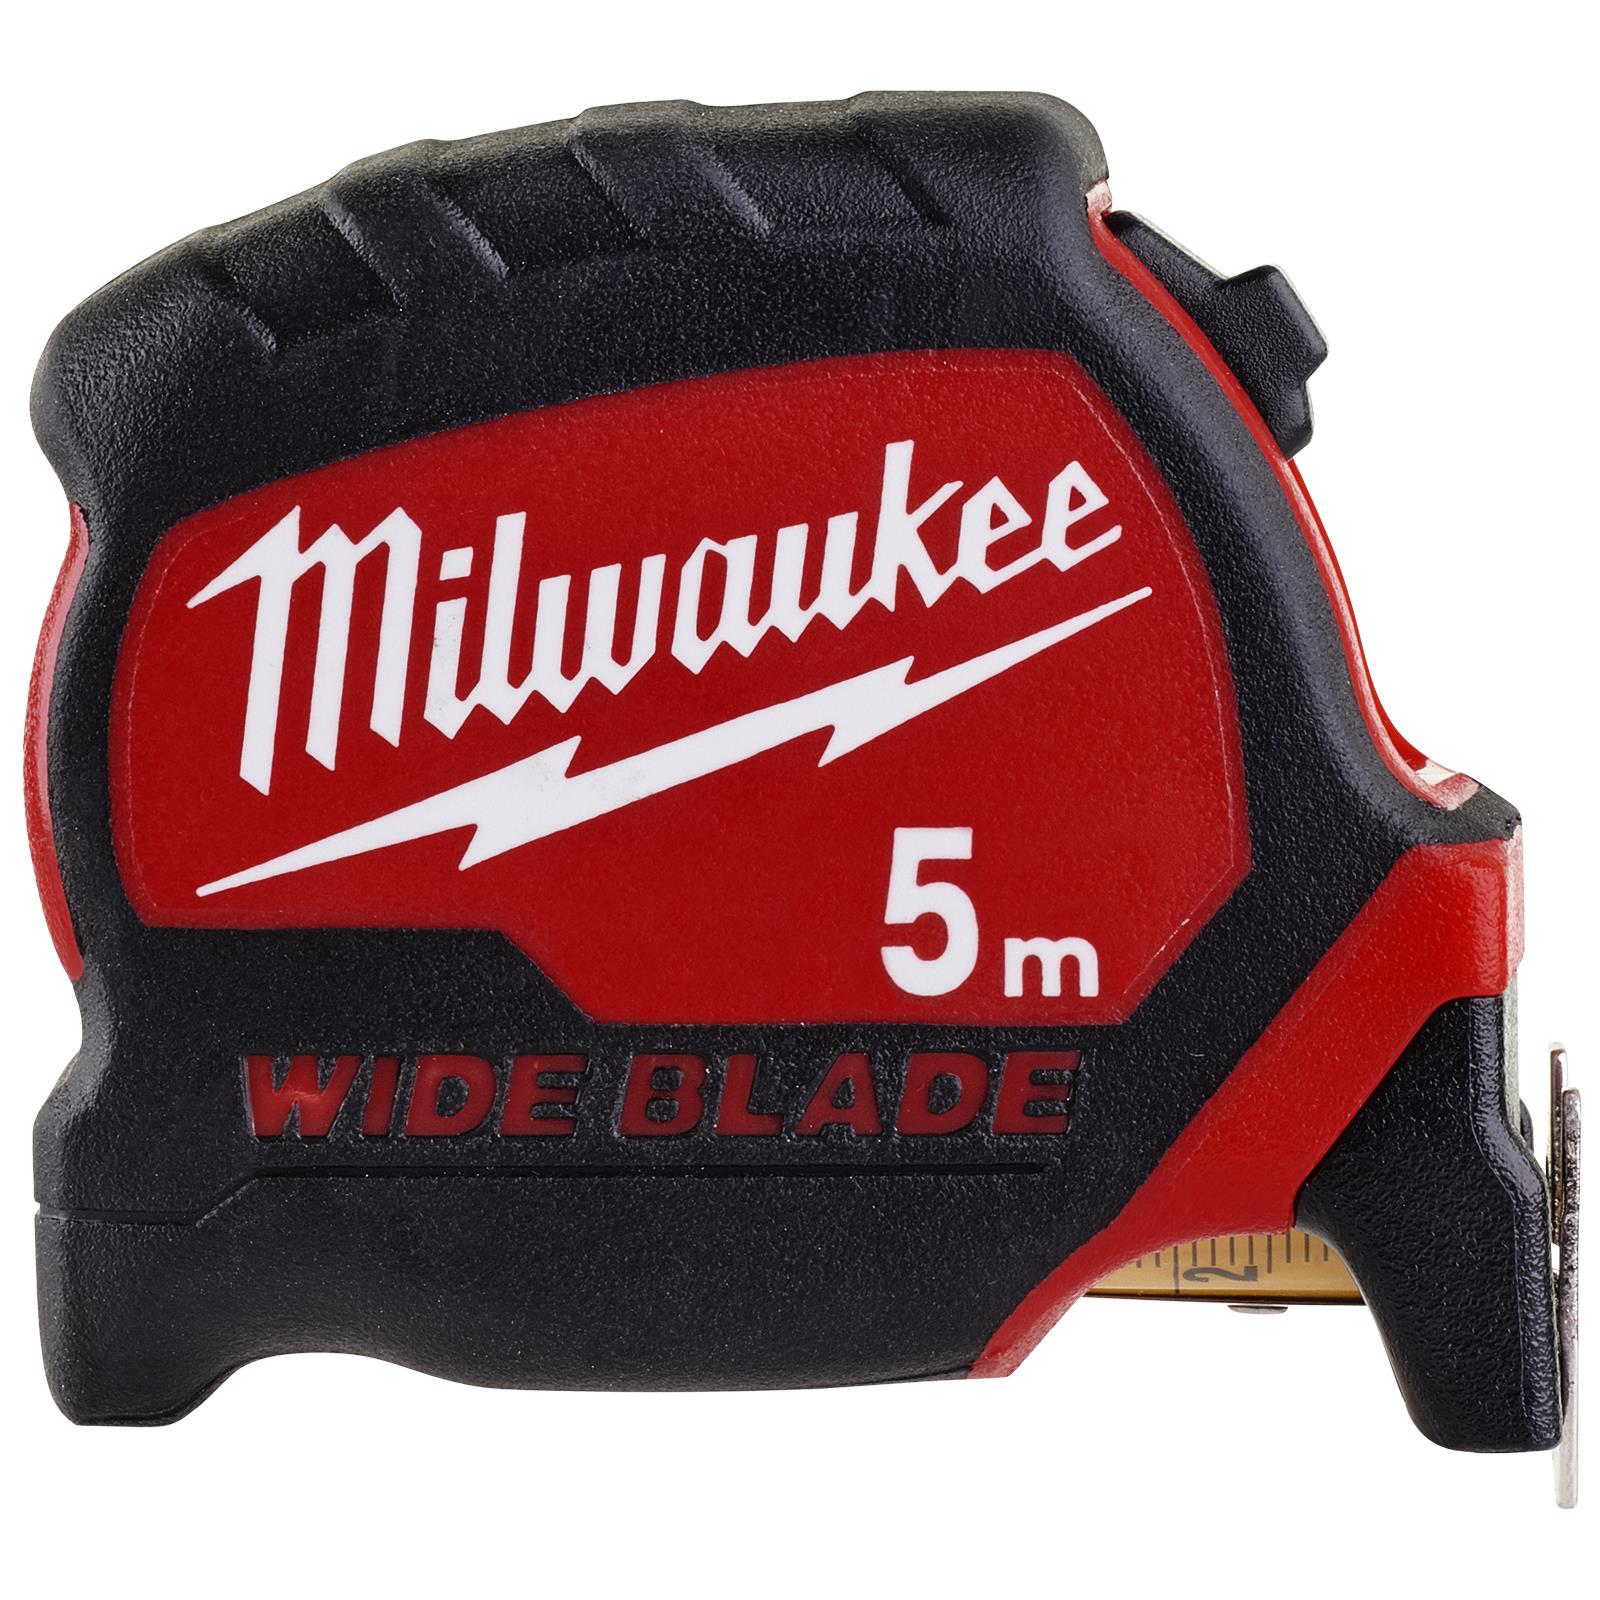 Milwaukee Tape Measure 5m Premium Wide Blade 33mm Metric